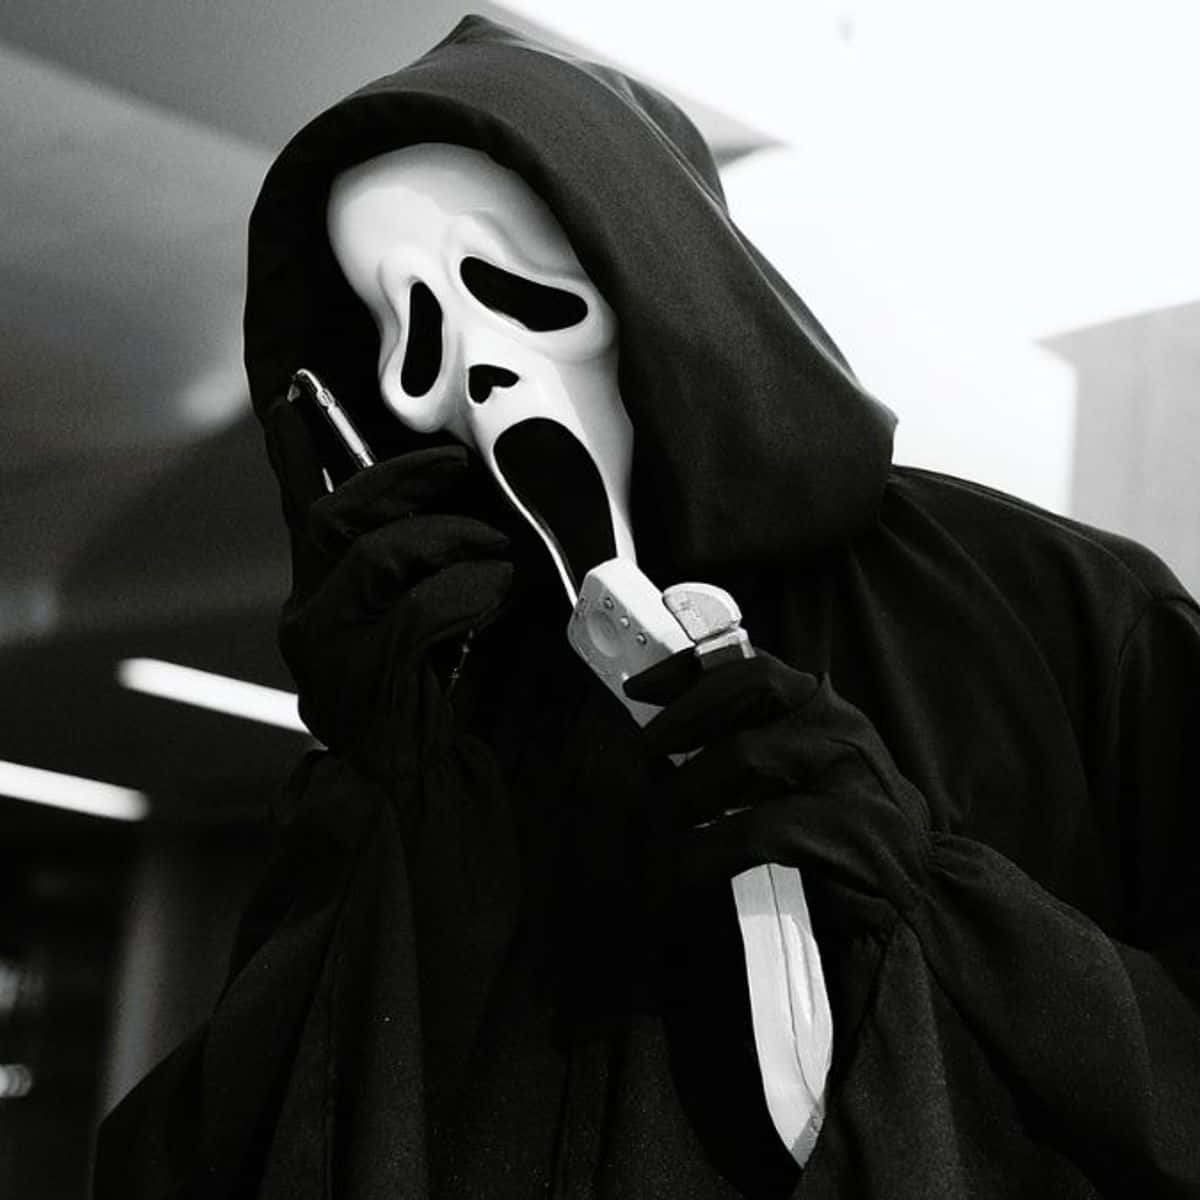 Laicónica Máscara Ghostface De La Serie De Películas Scream